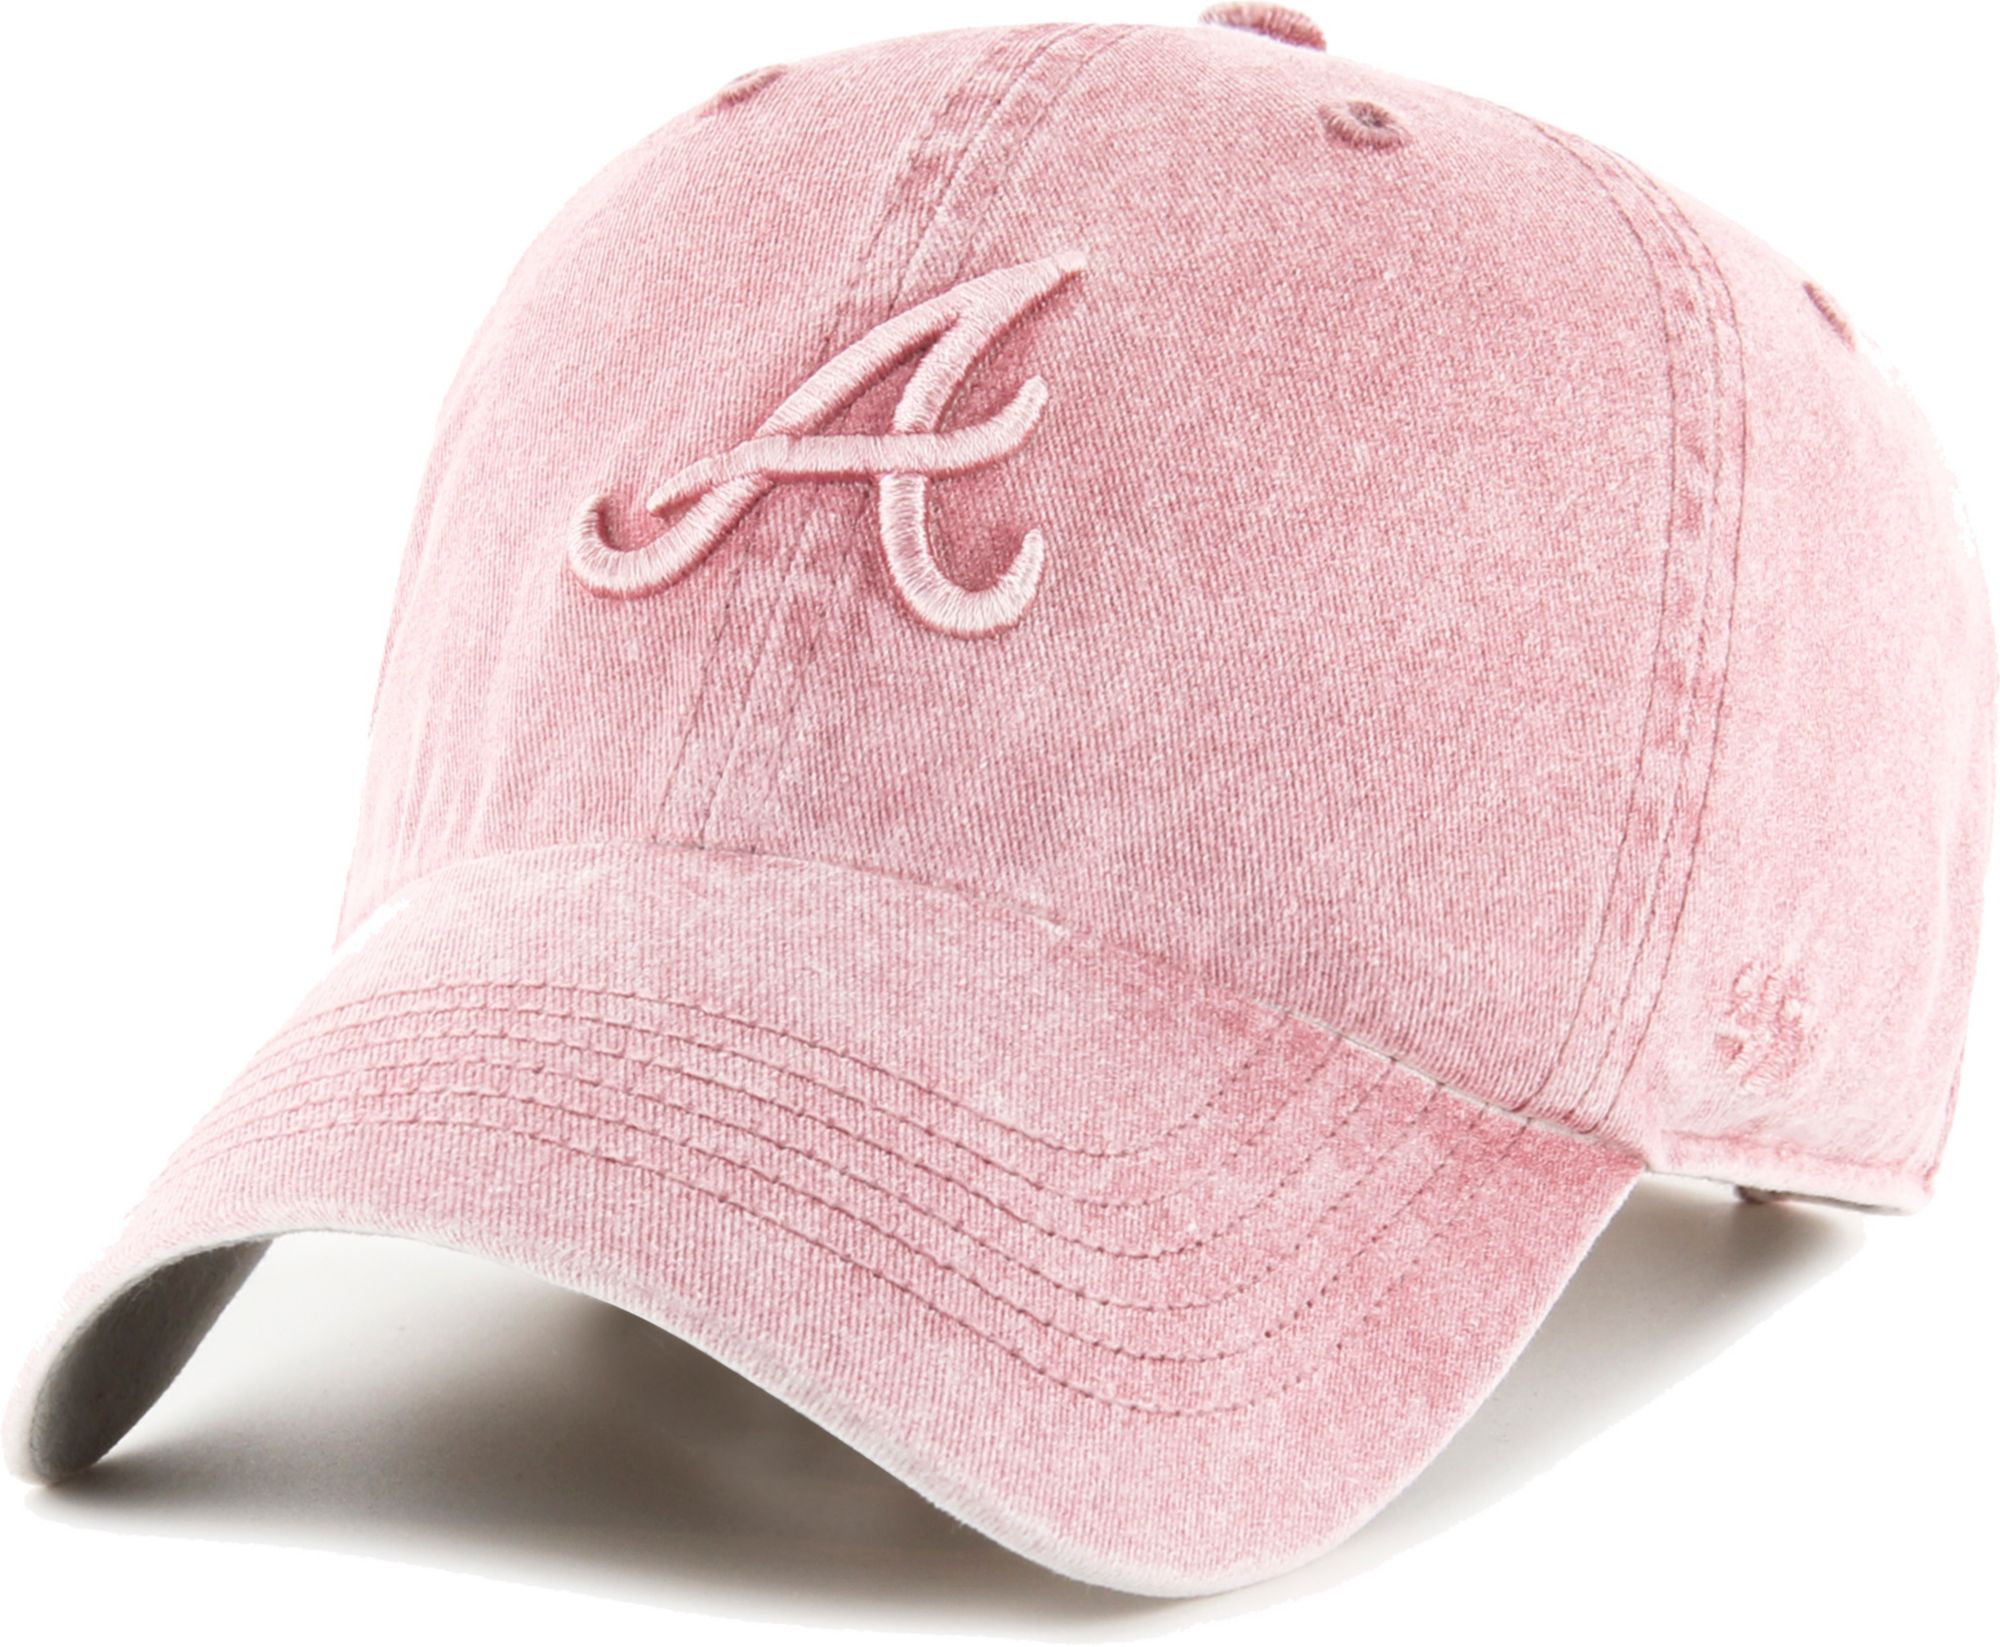 Men's Atlanta Braves Gray Flyout Adjustable Hat